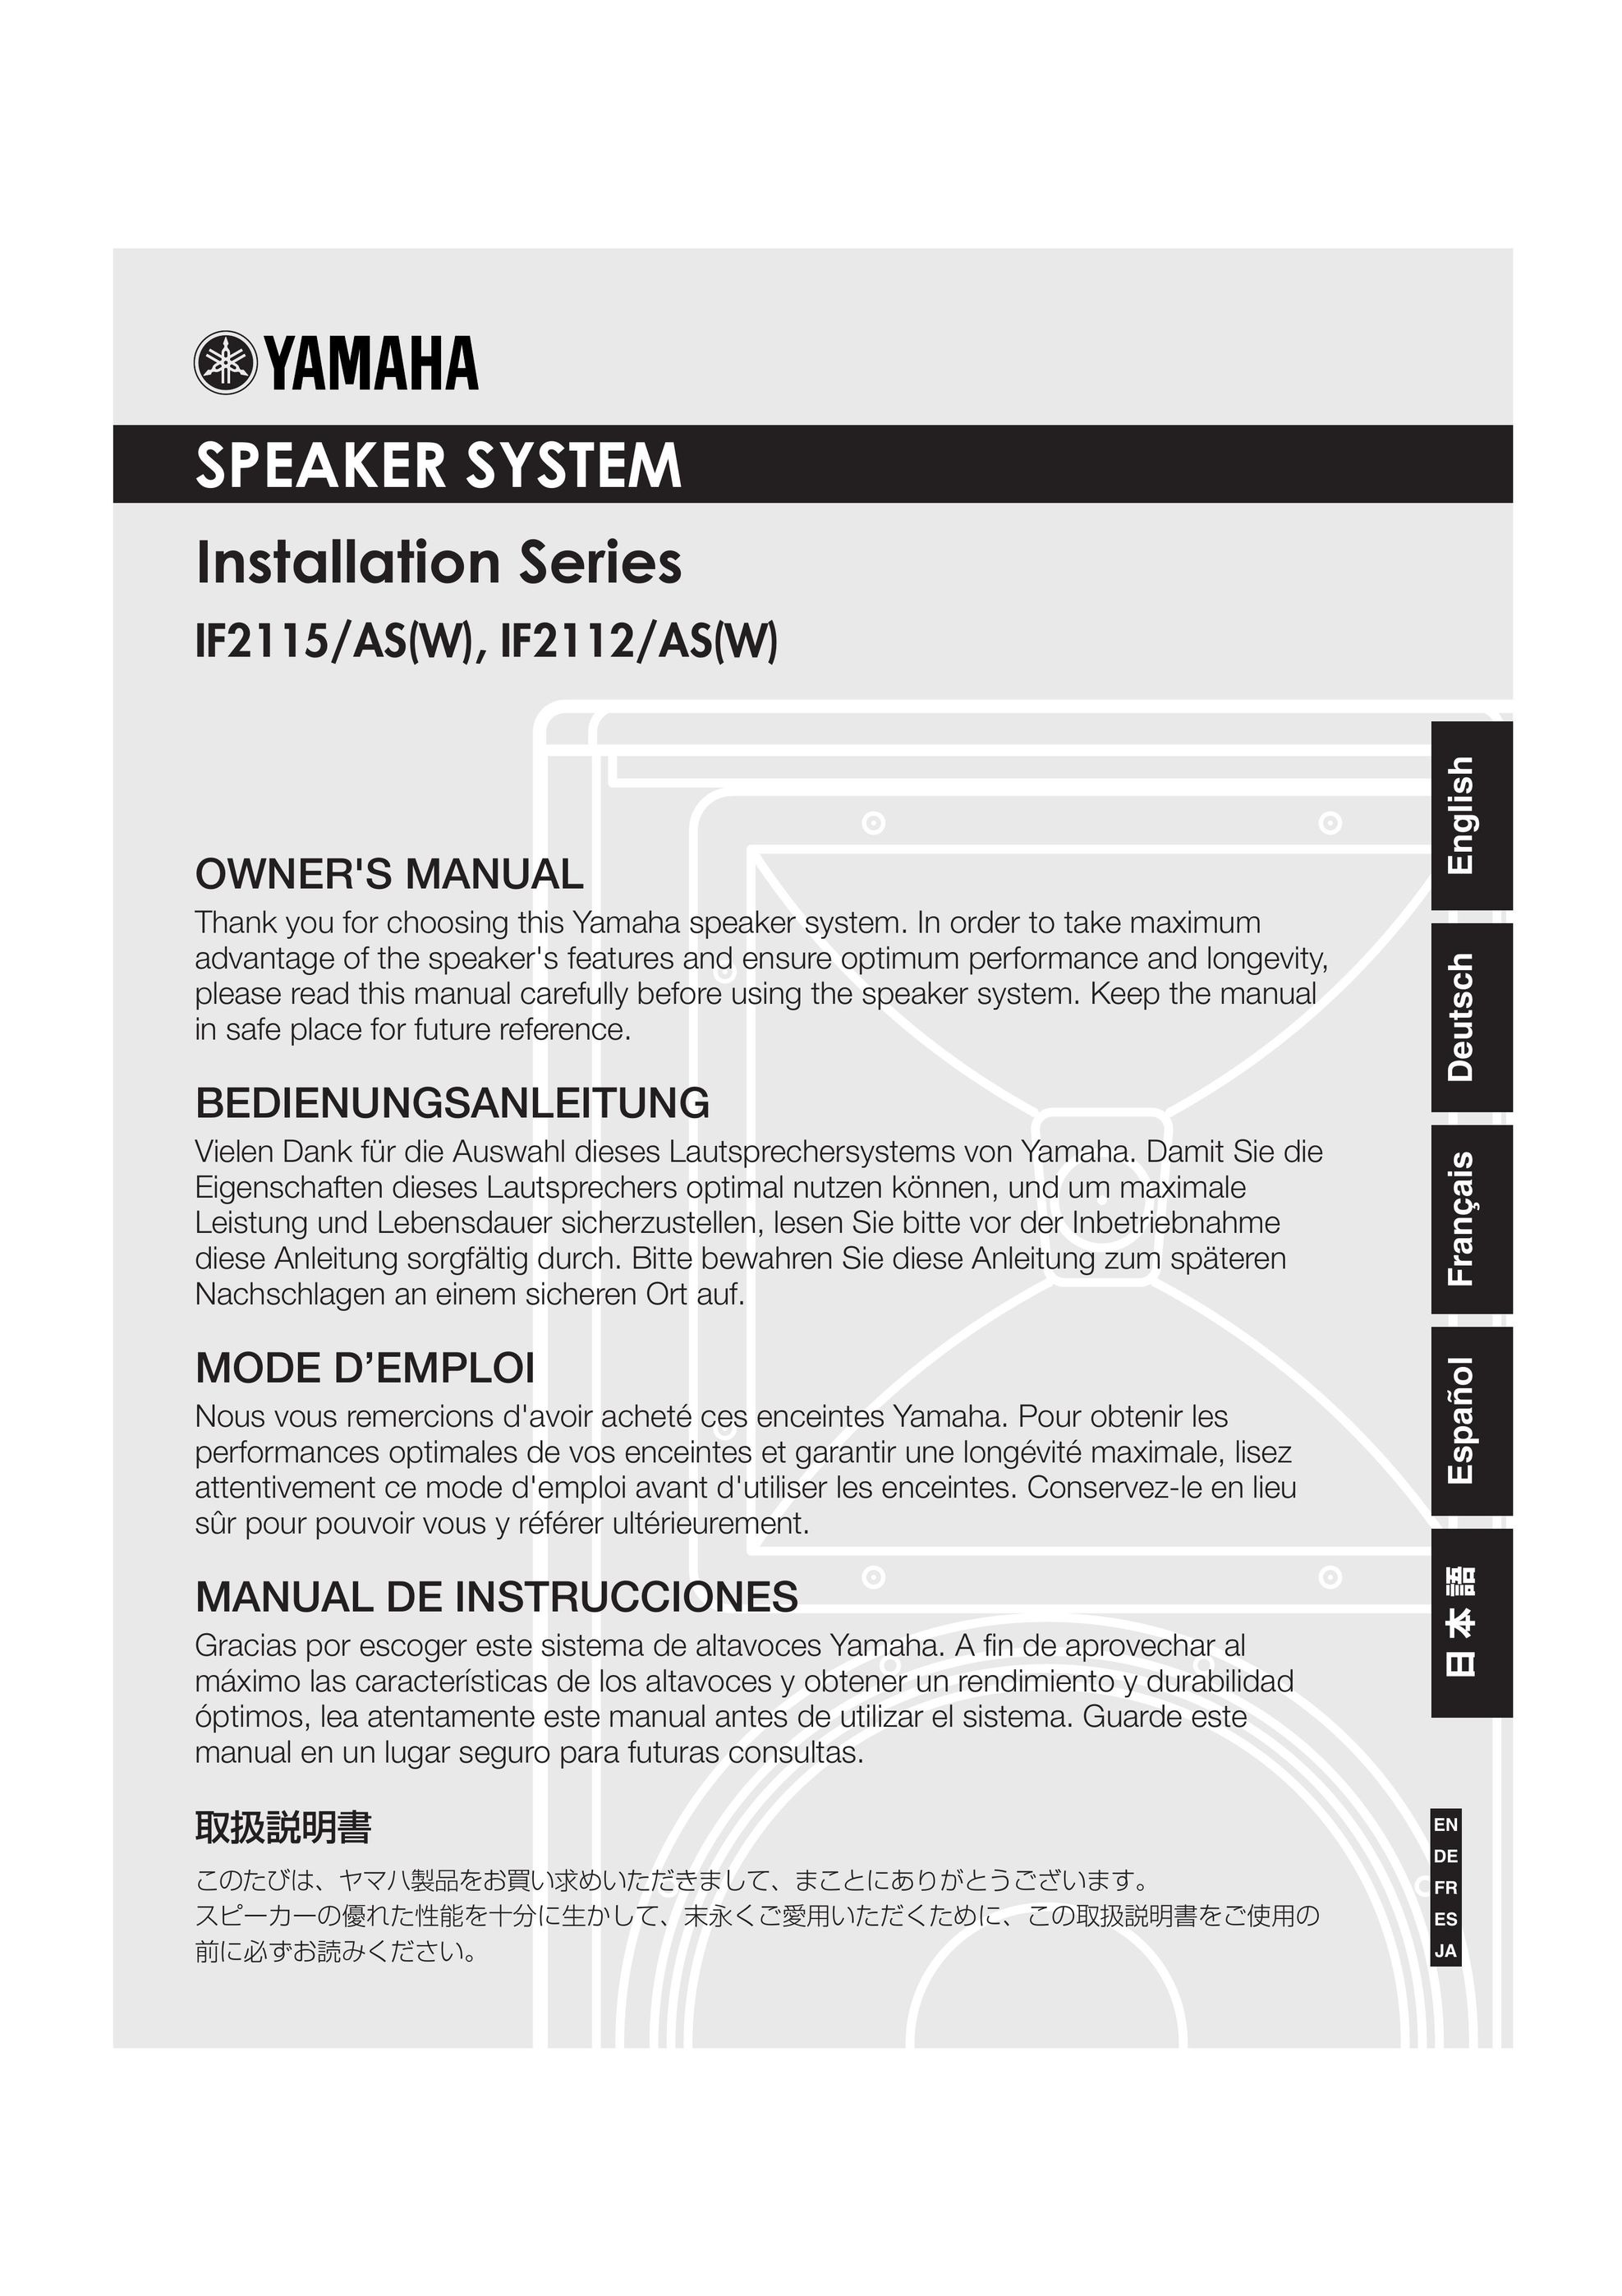 Yamaha F2112/AS(W) Portable Speaker User Manual